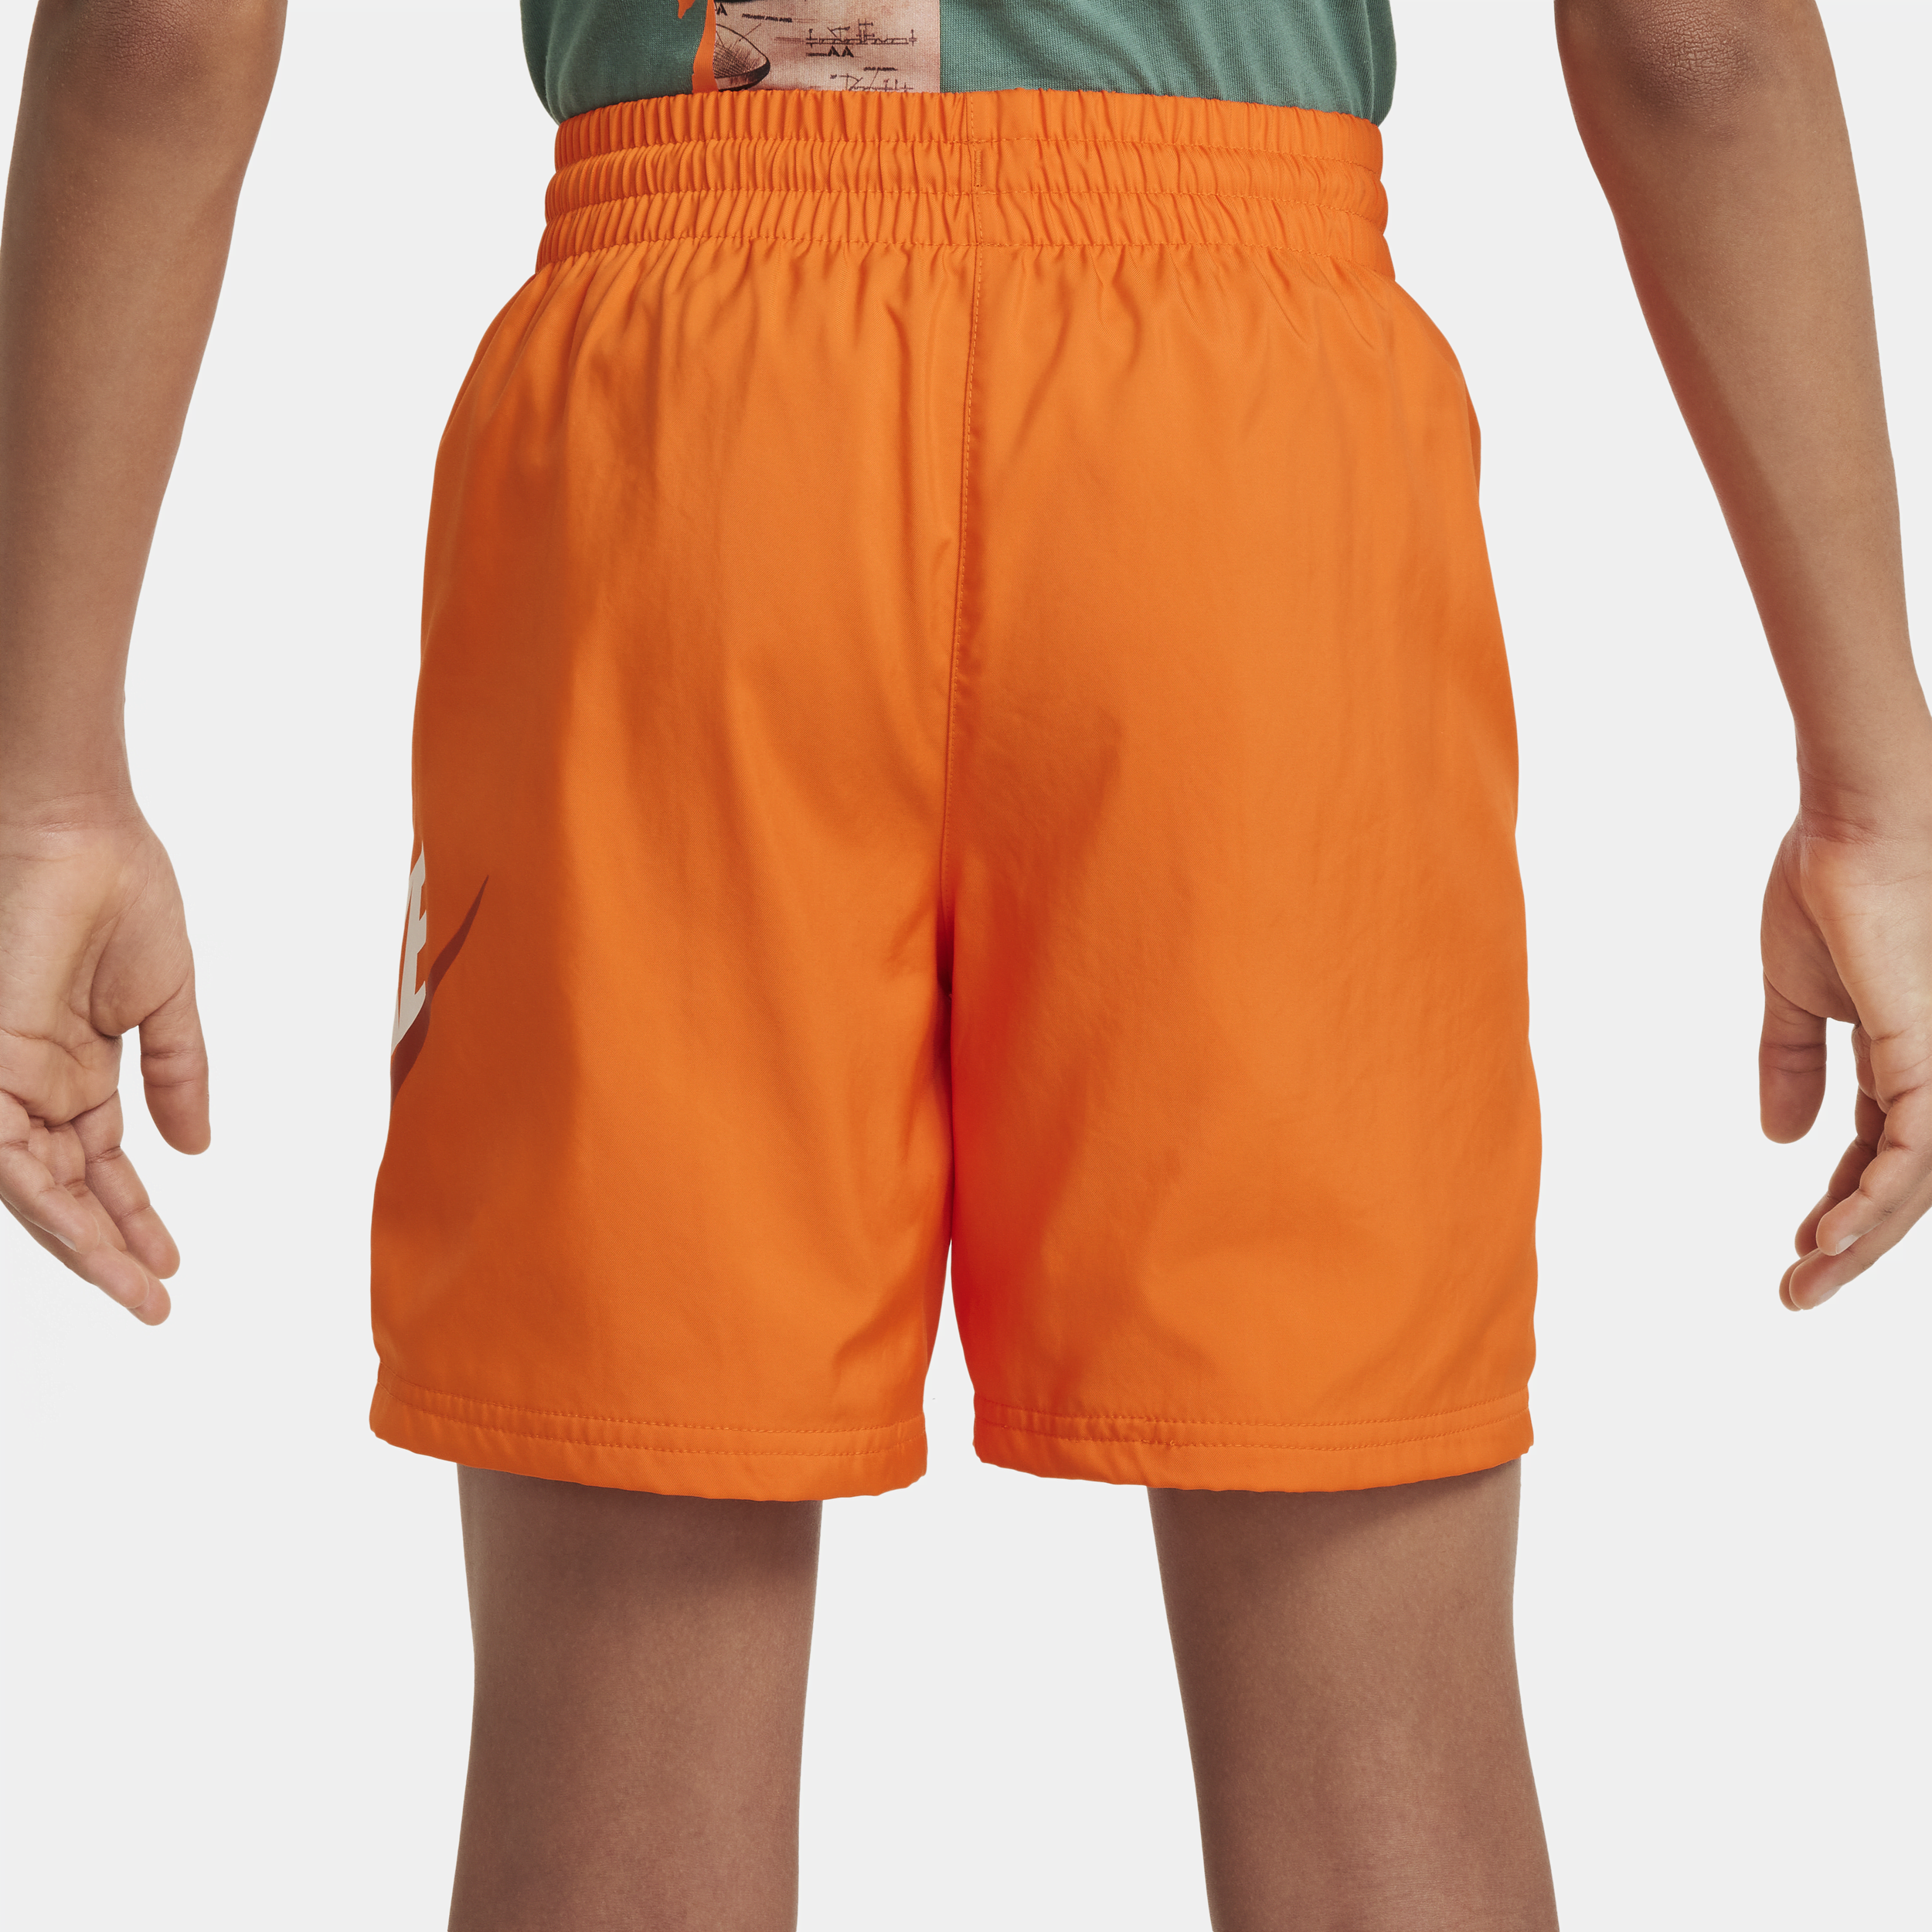 Nike Sportswear geweven kindershorts Oranje